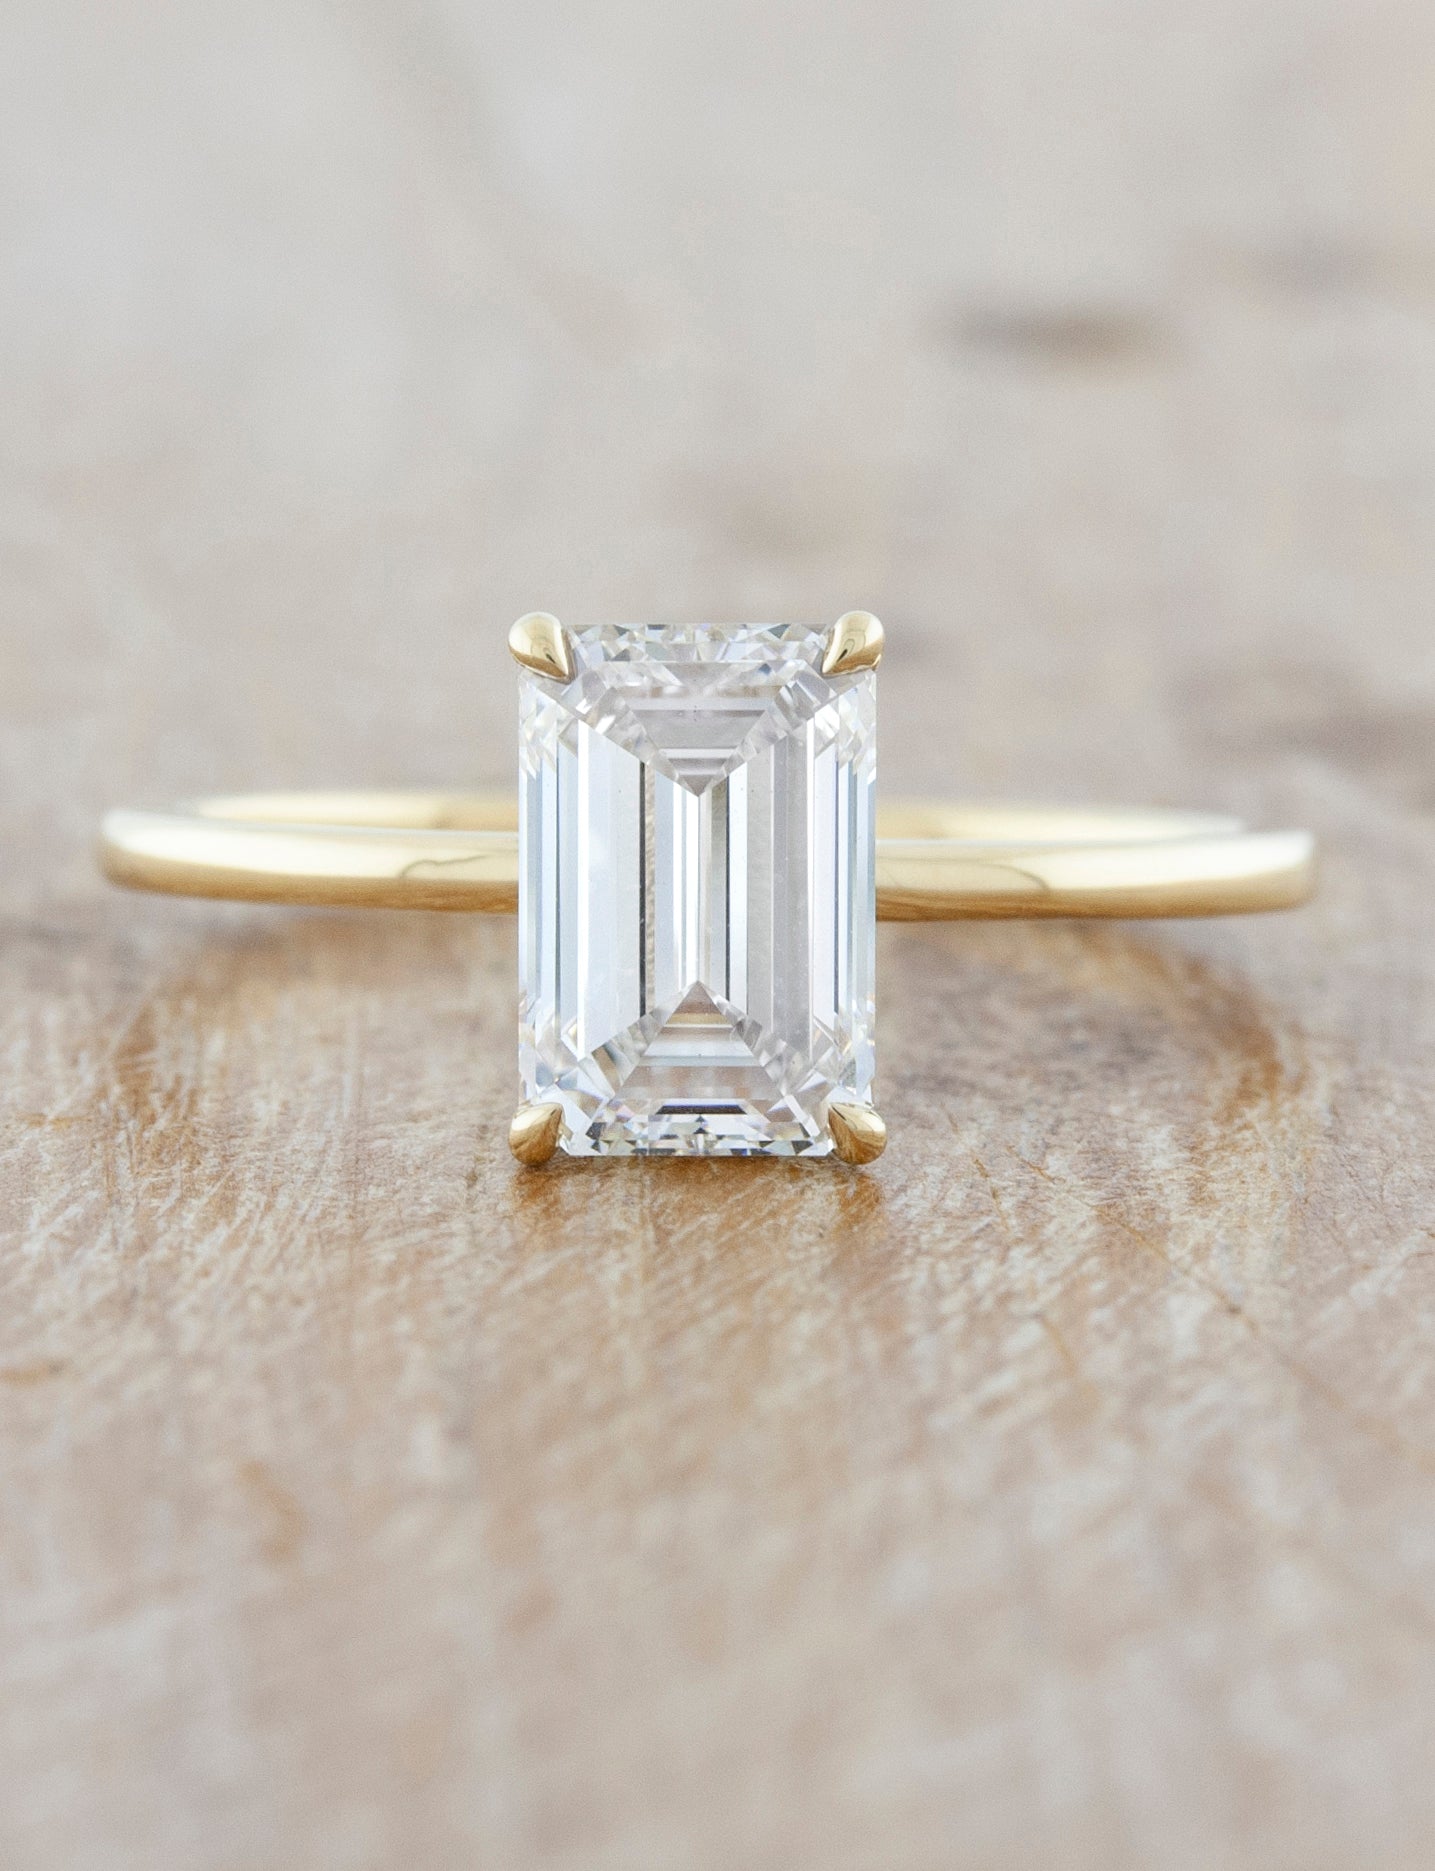 Florina Emerald: Emerald Cut Solitaire Engagement Ring with a Thin Band | Ken Dana Design